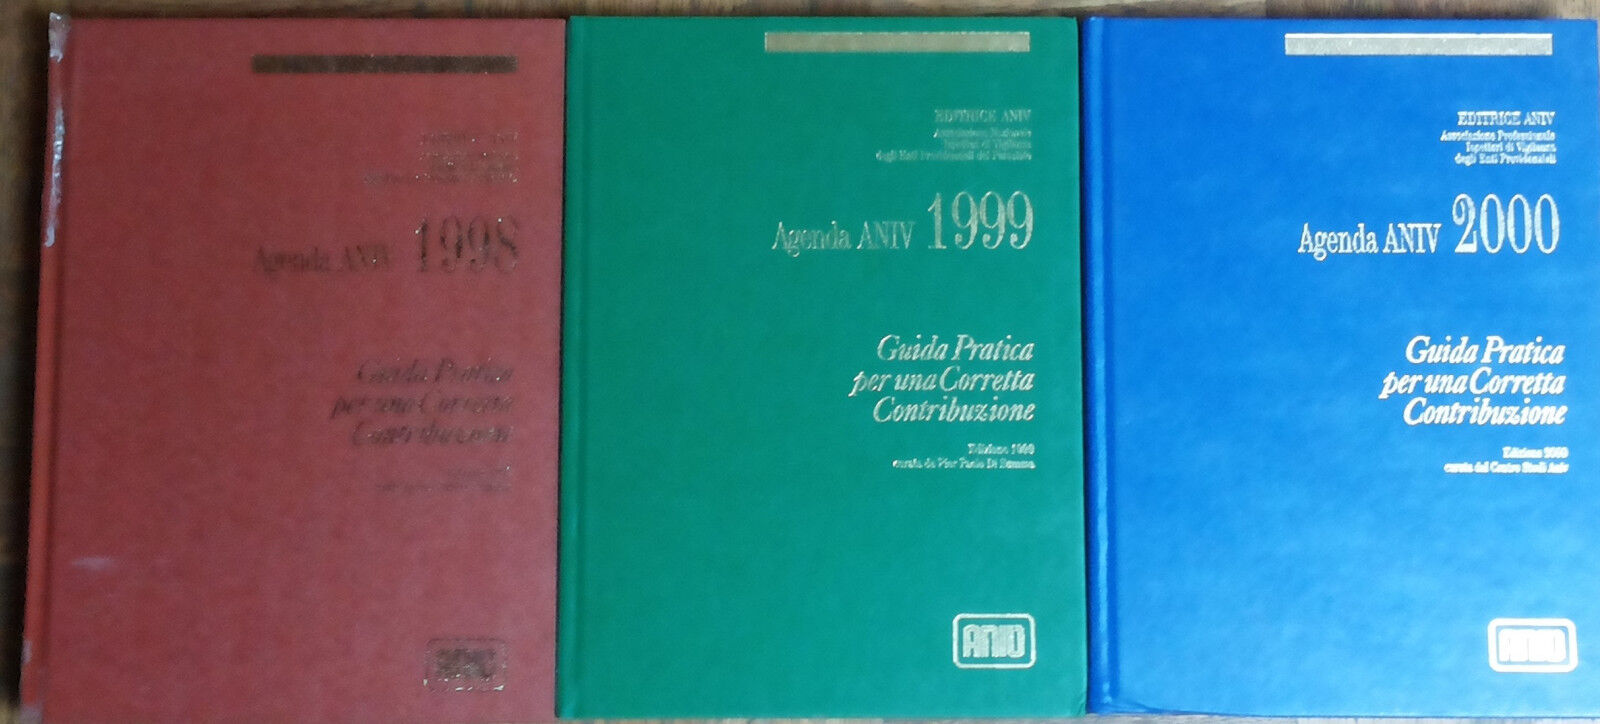 Agenda Aniv 1998,1999,2000 - AA.VV. - Editrice Aniv - R